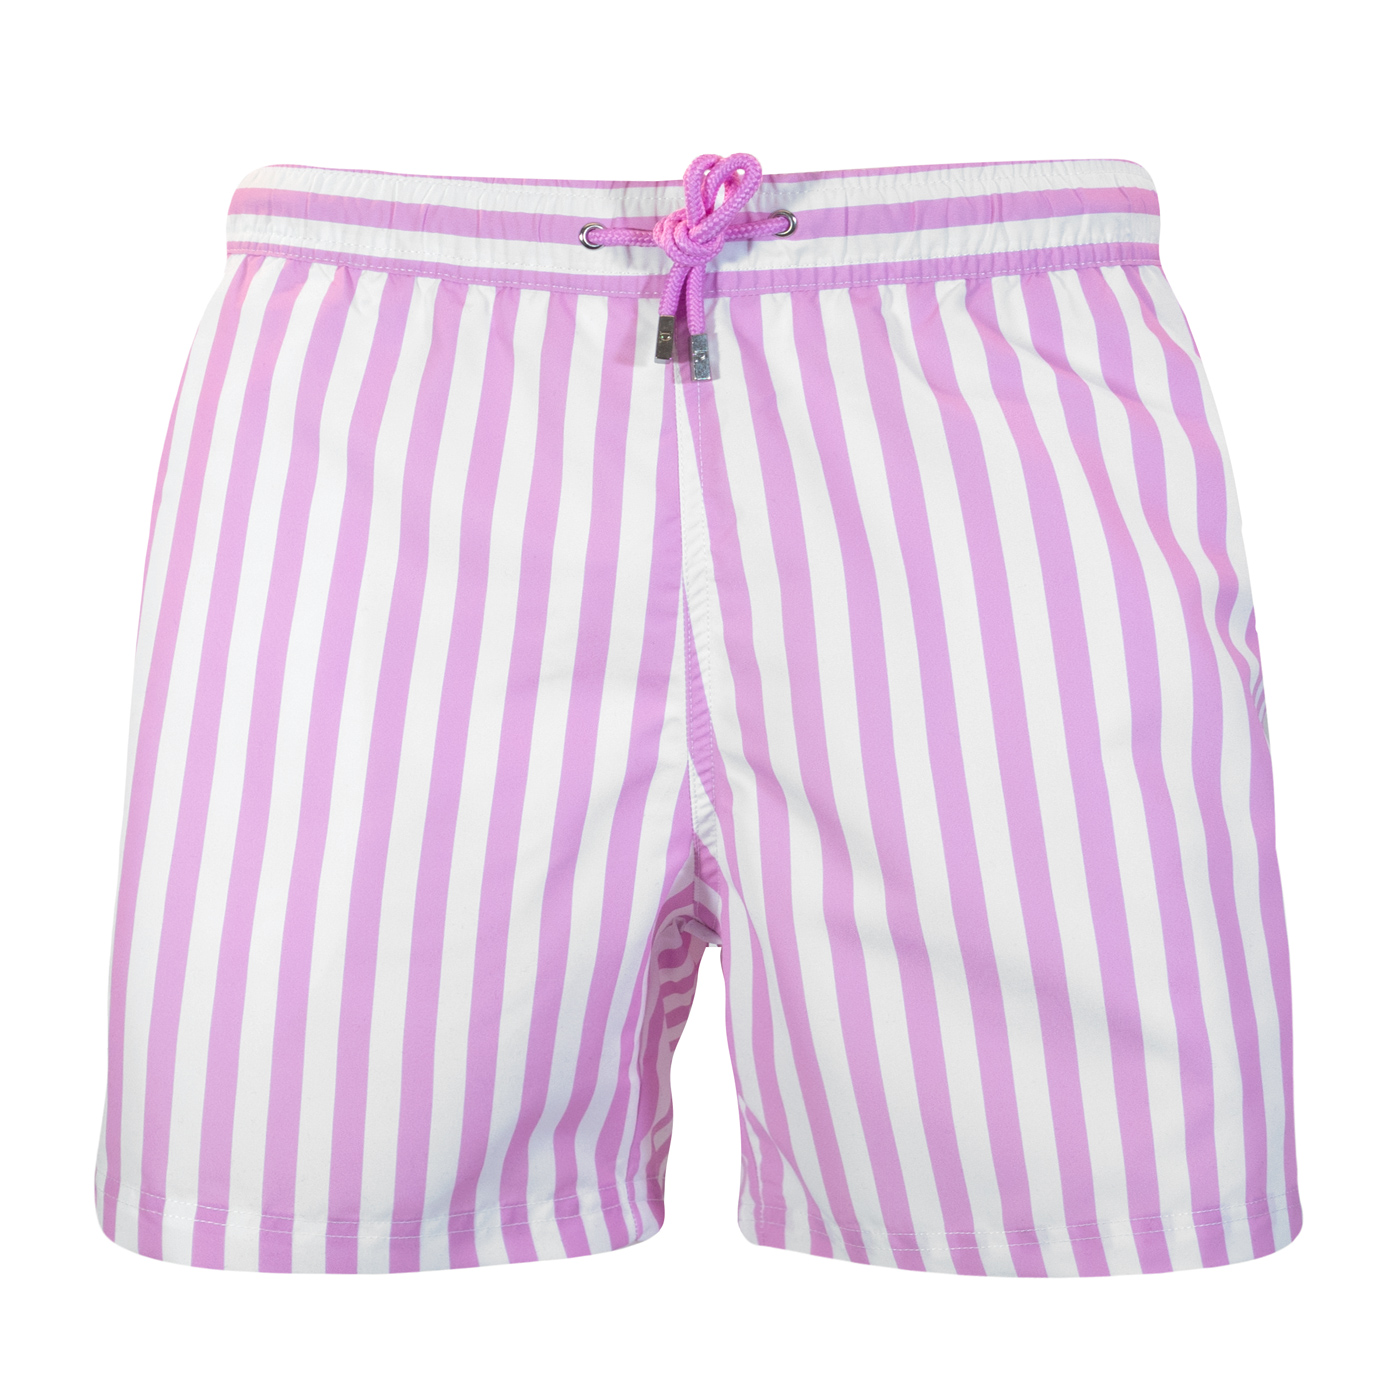 Pink striped swim shorts